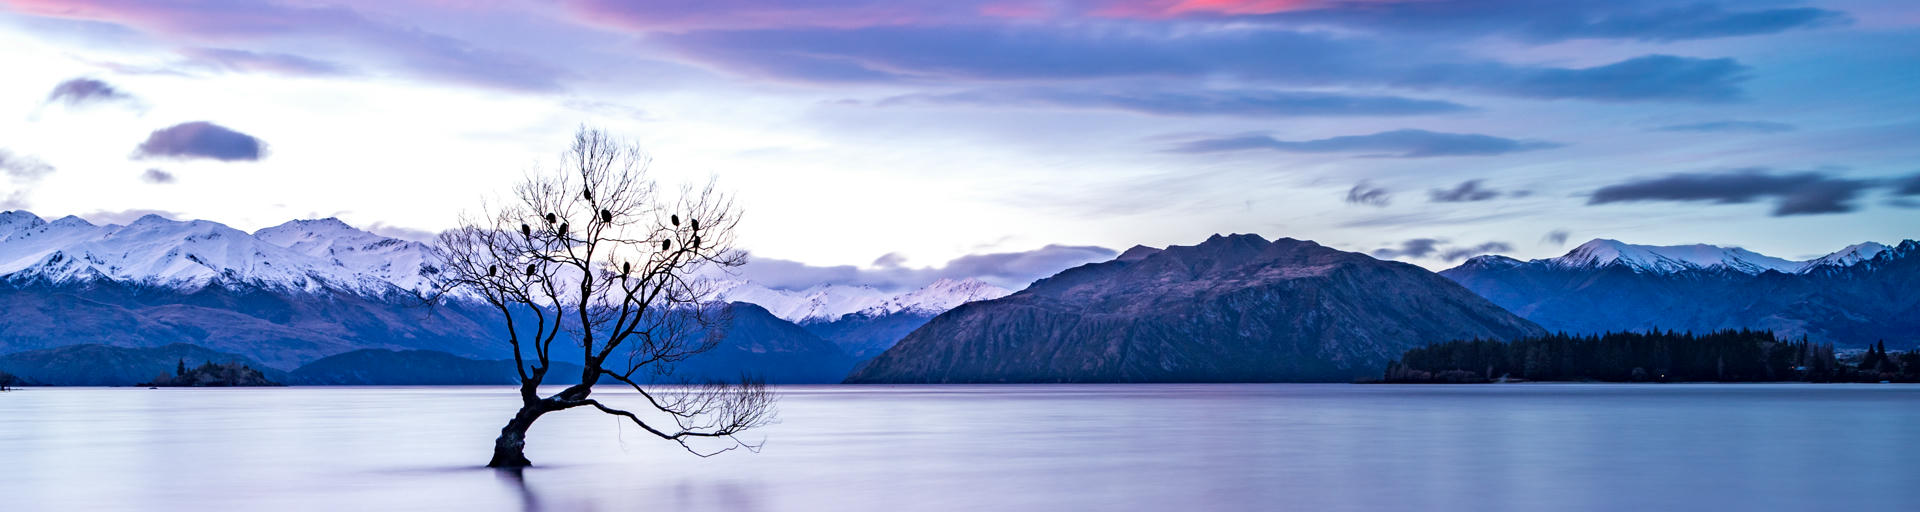 Der berühmte Baum in Wanaka in Neuseeland in Winterlandschaft